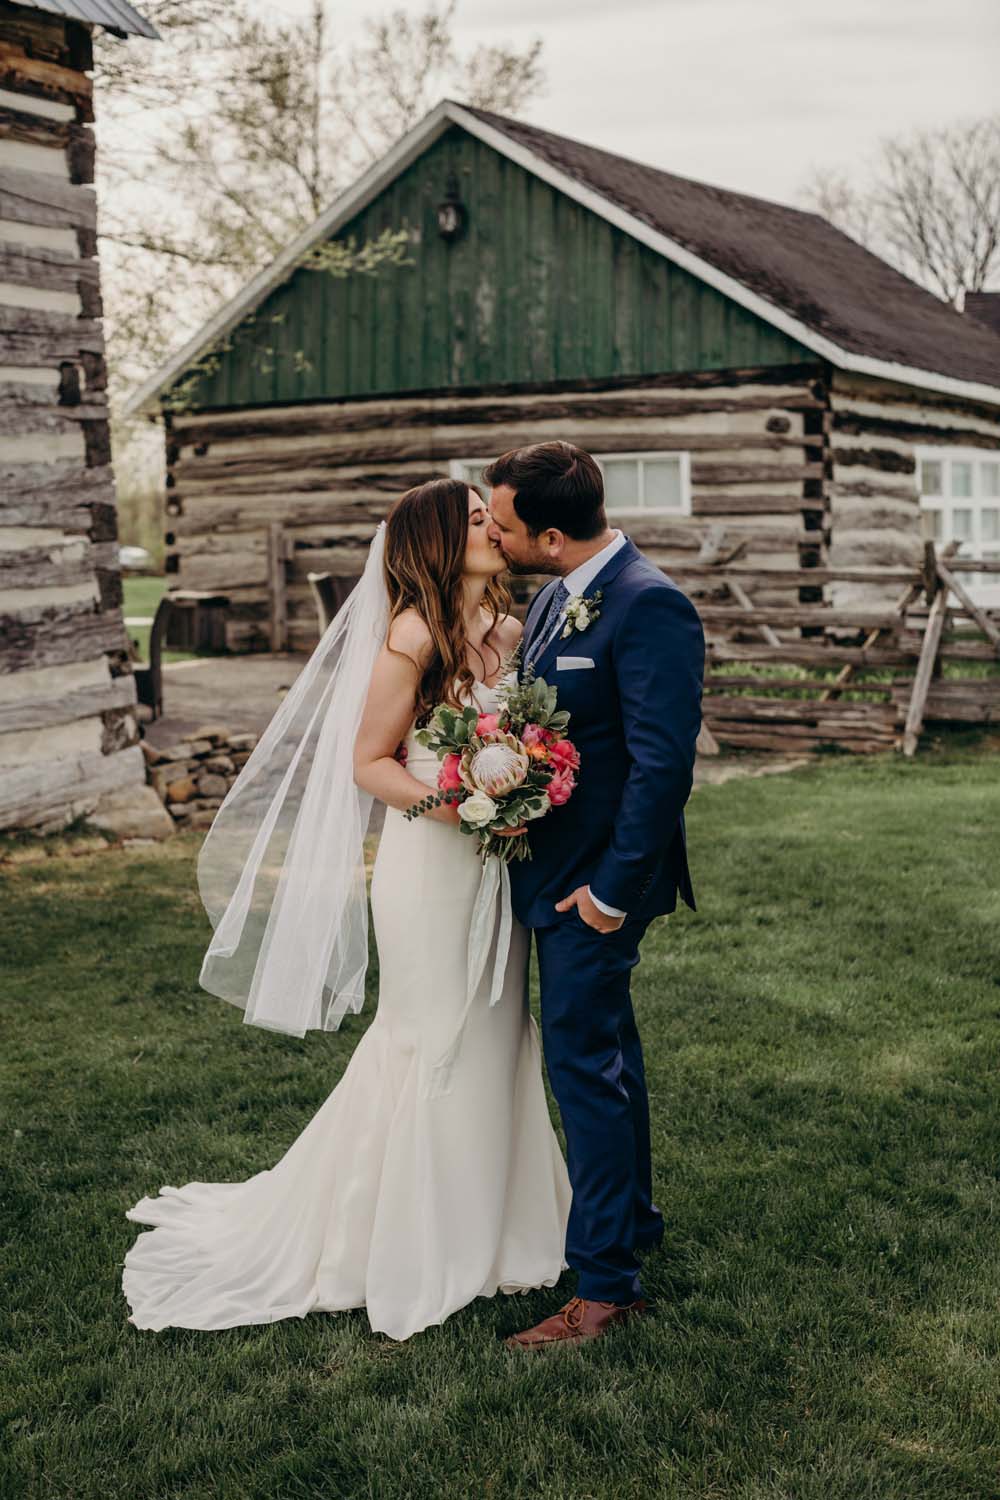 A Rustic-Chic Farm Wedding Outside Of Ottawa - bride and groom